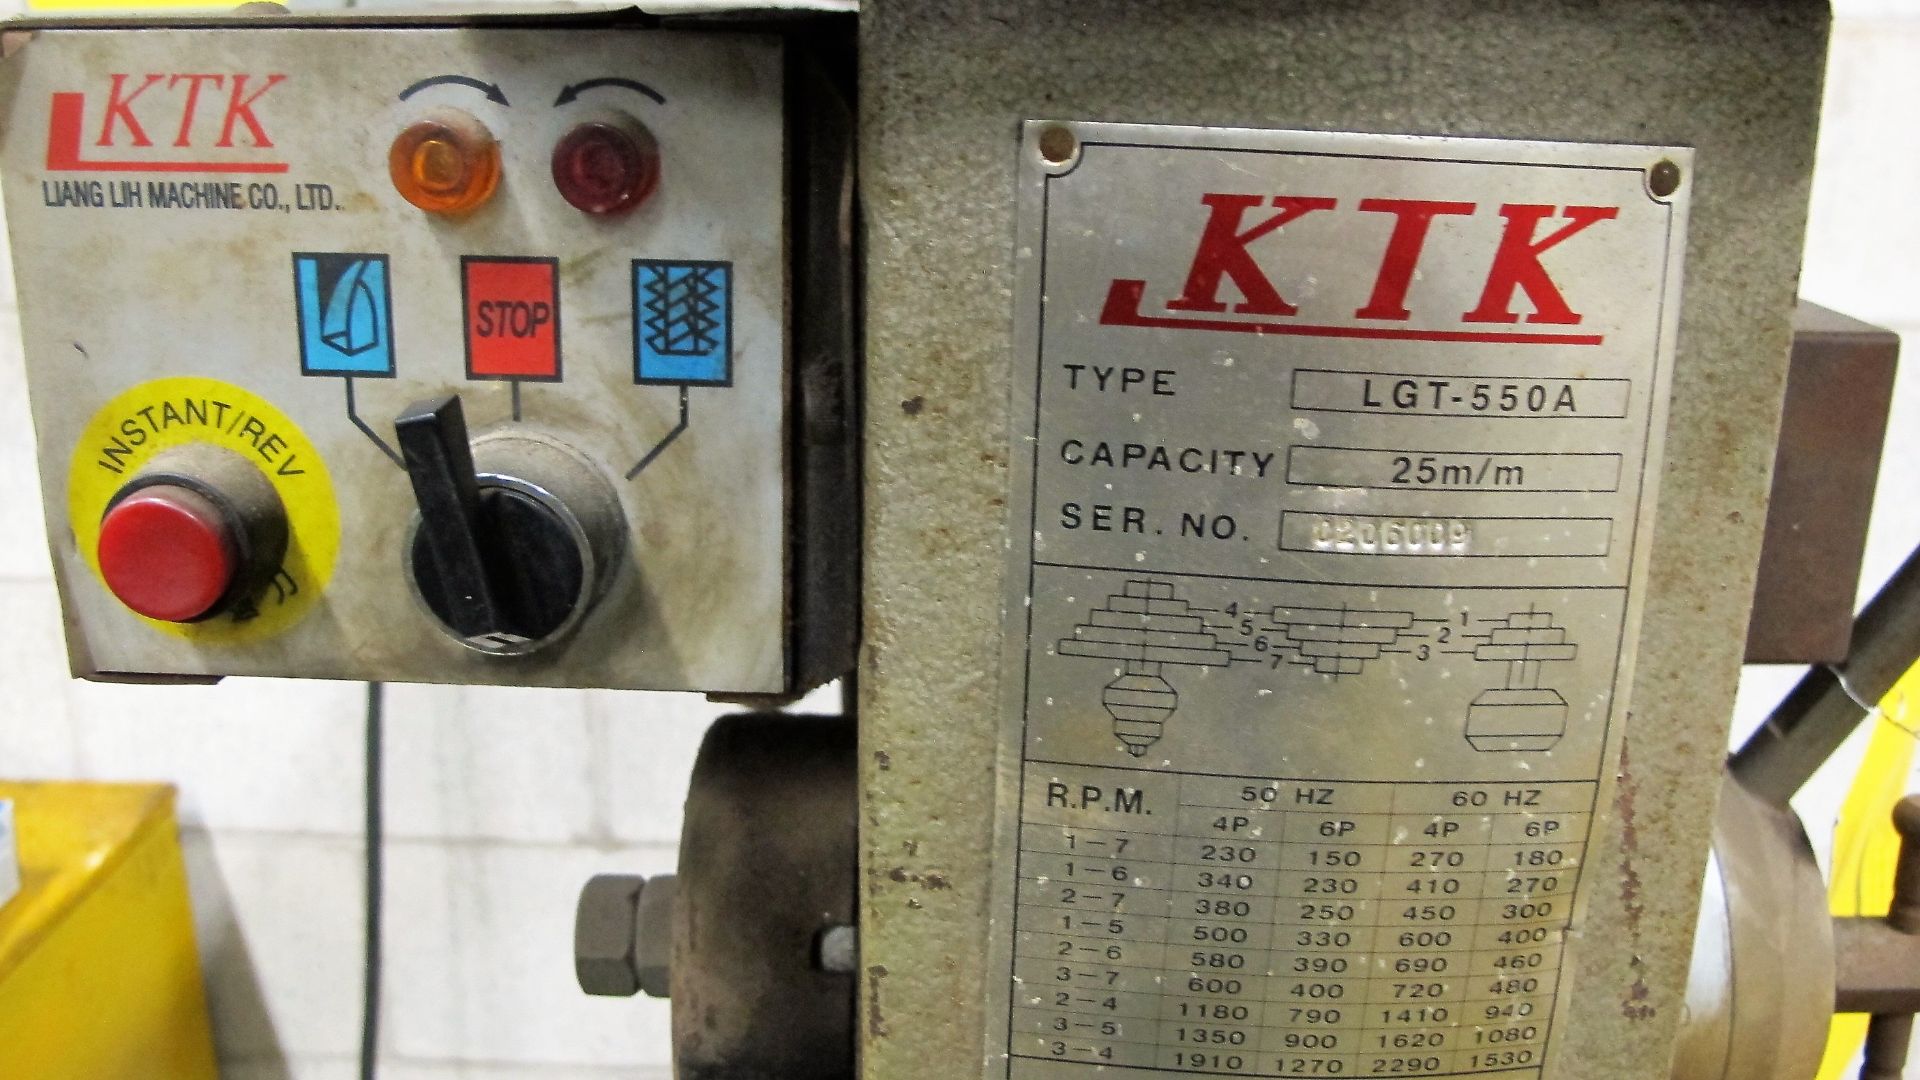 KTK LGT-550A DRILL PRESS, S/N 0206009, 380V - Image 2 of 2